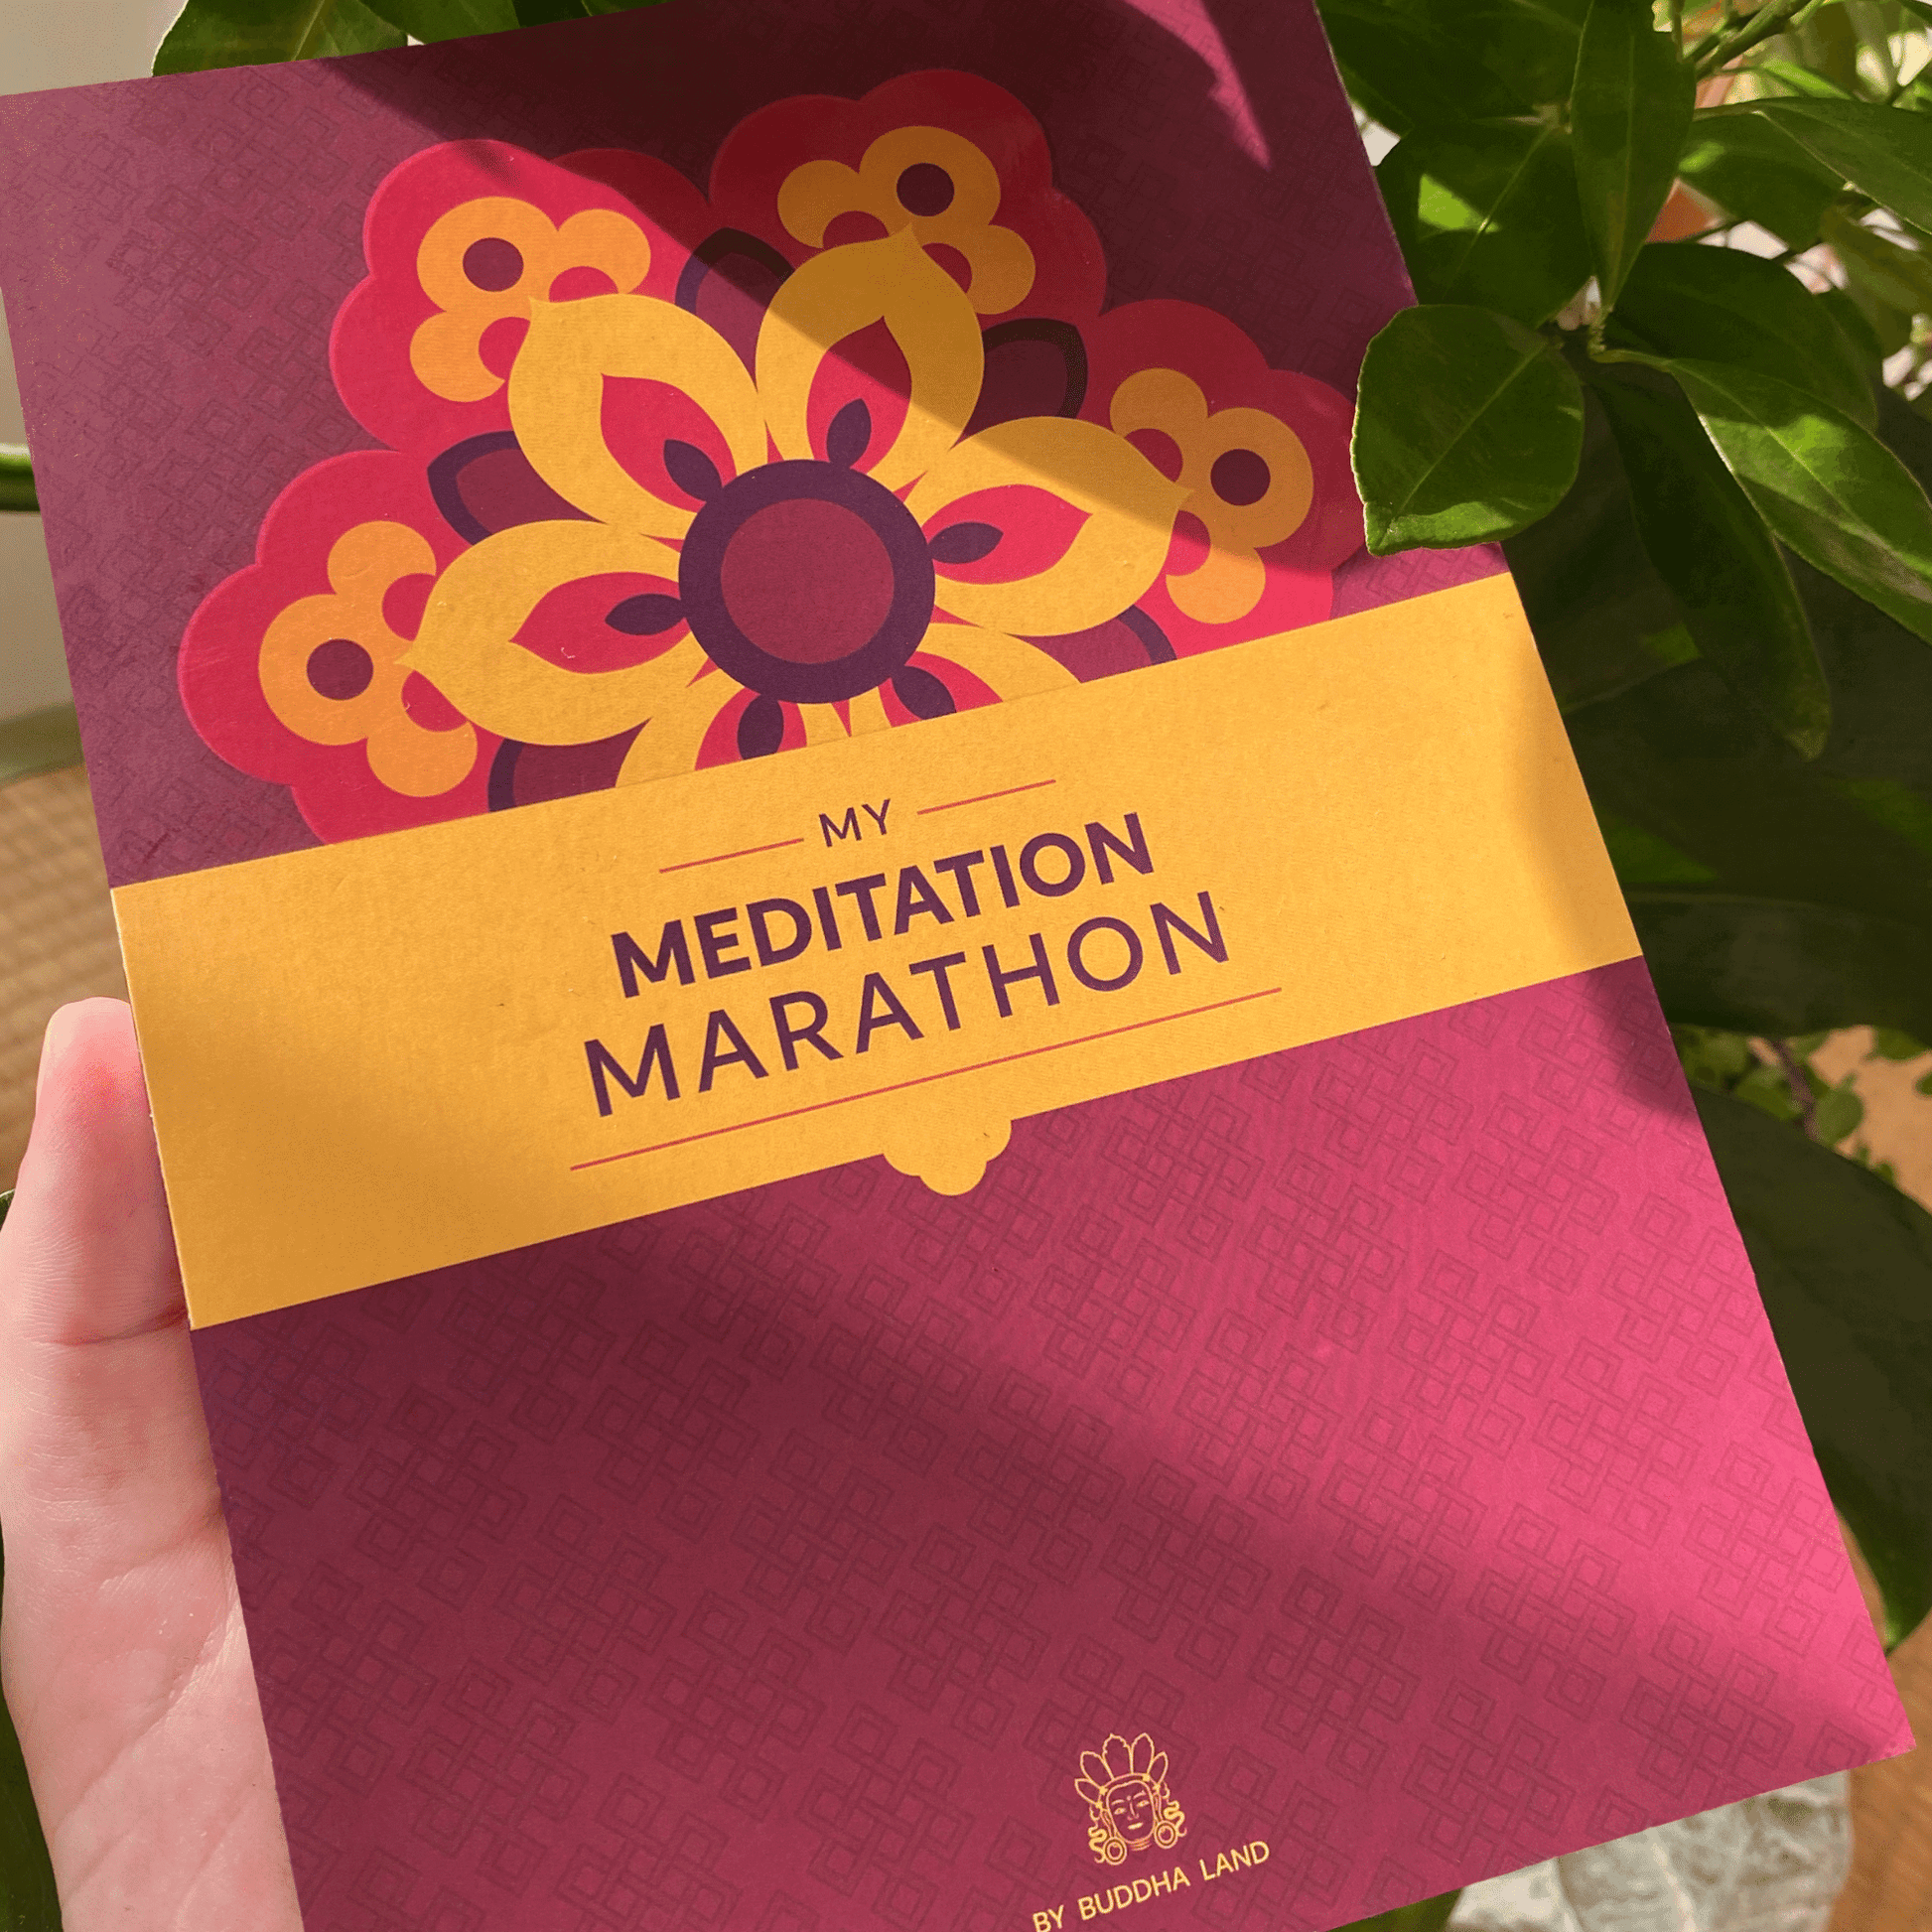 My Meditation Marathon mindfulness journal cover.